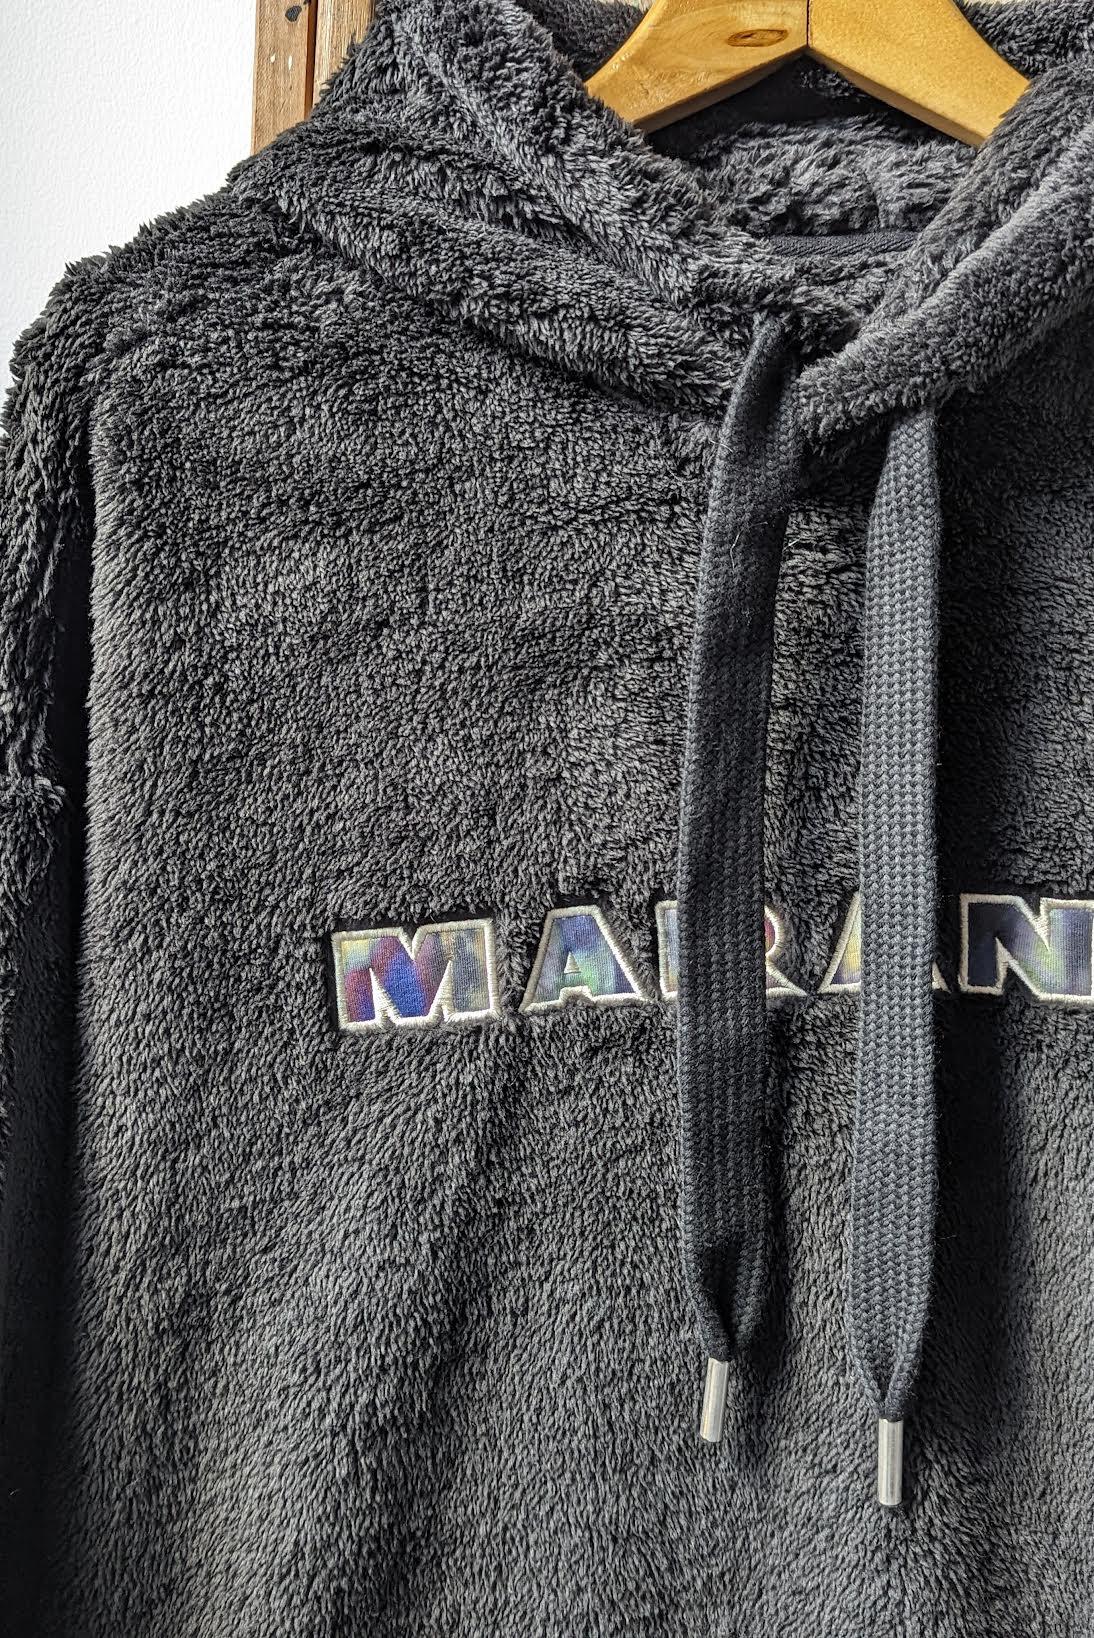 Marant Etoile - Martia Black Hooded Sweatshirt - 32 The Guild